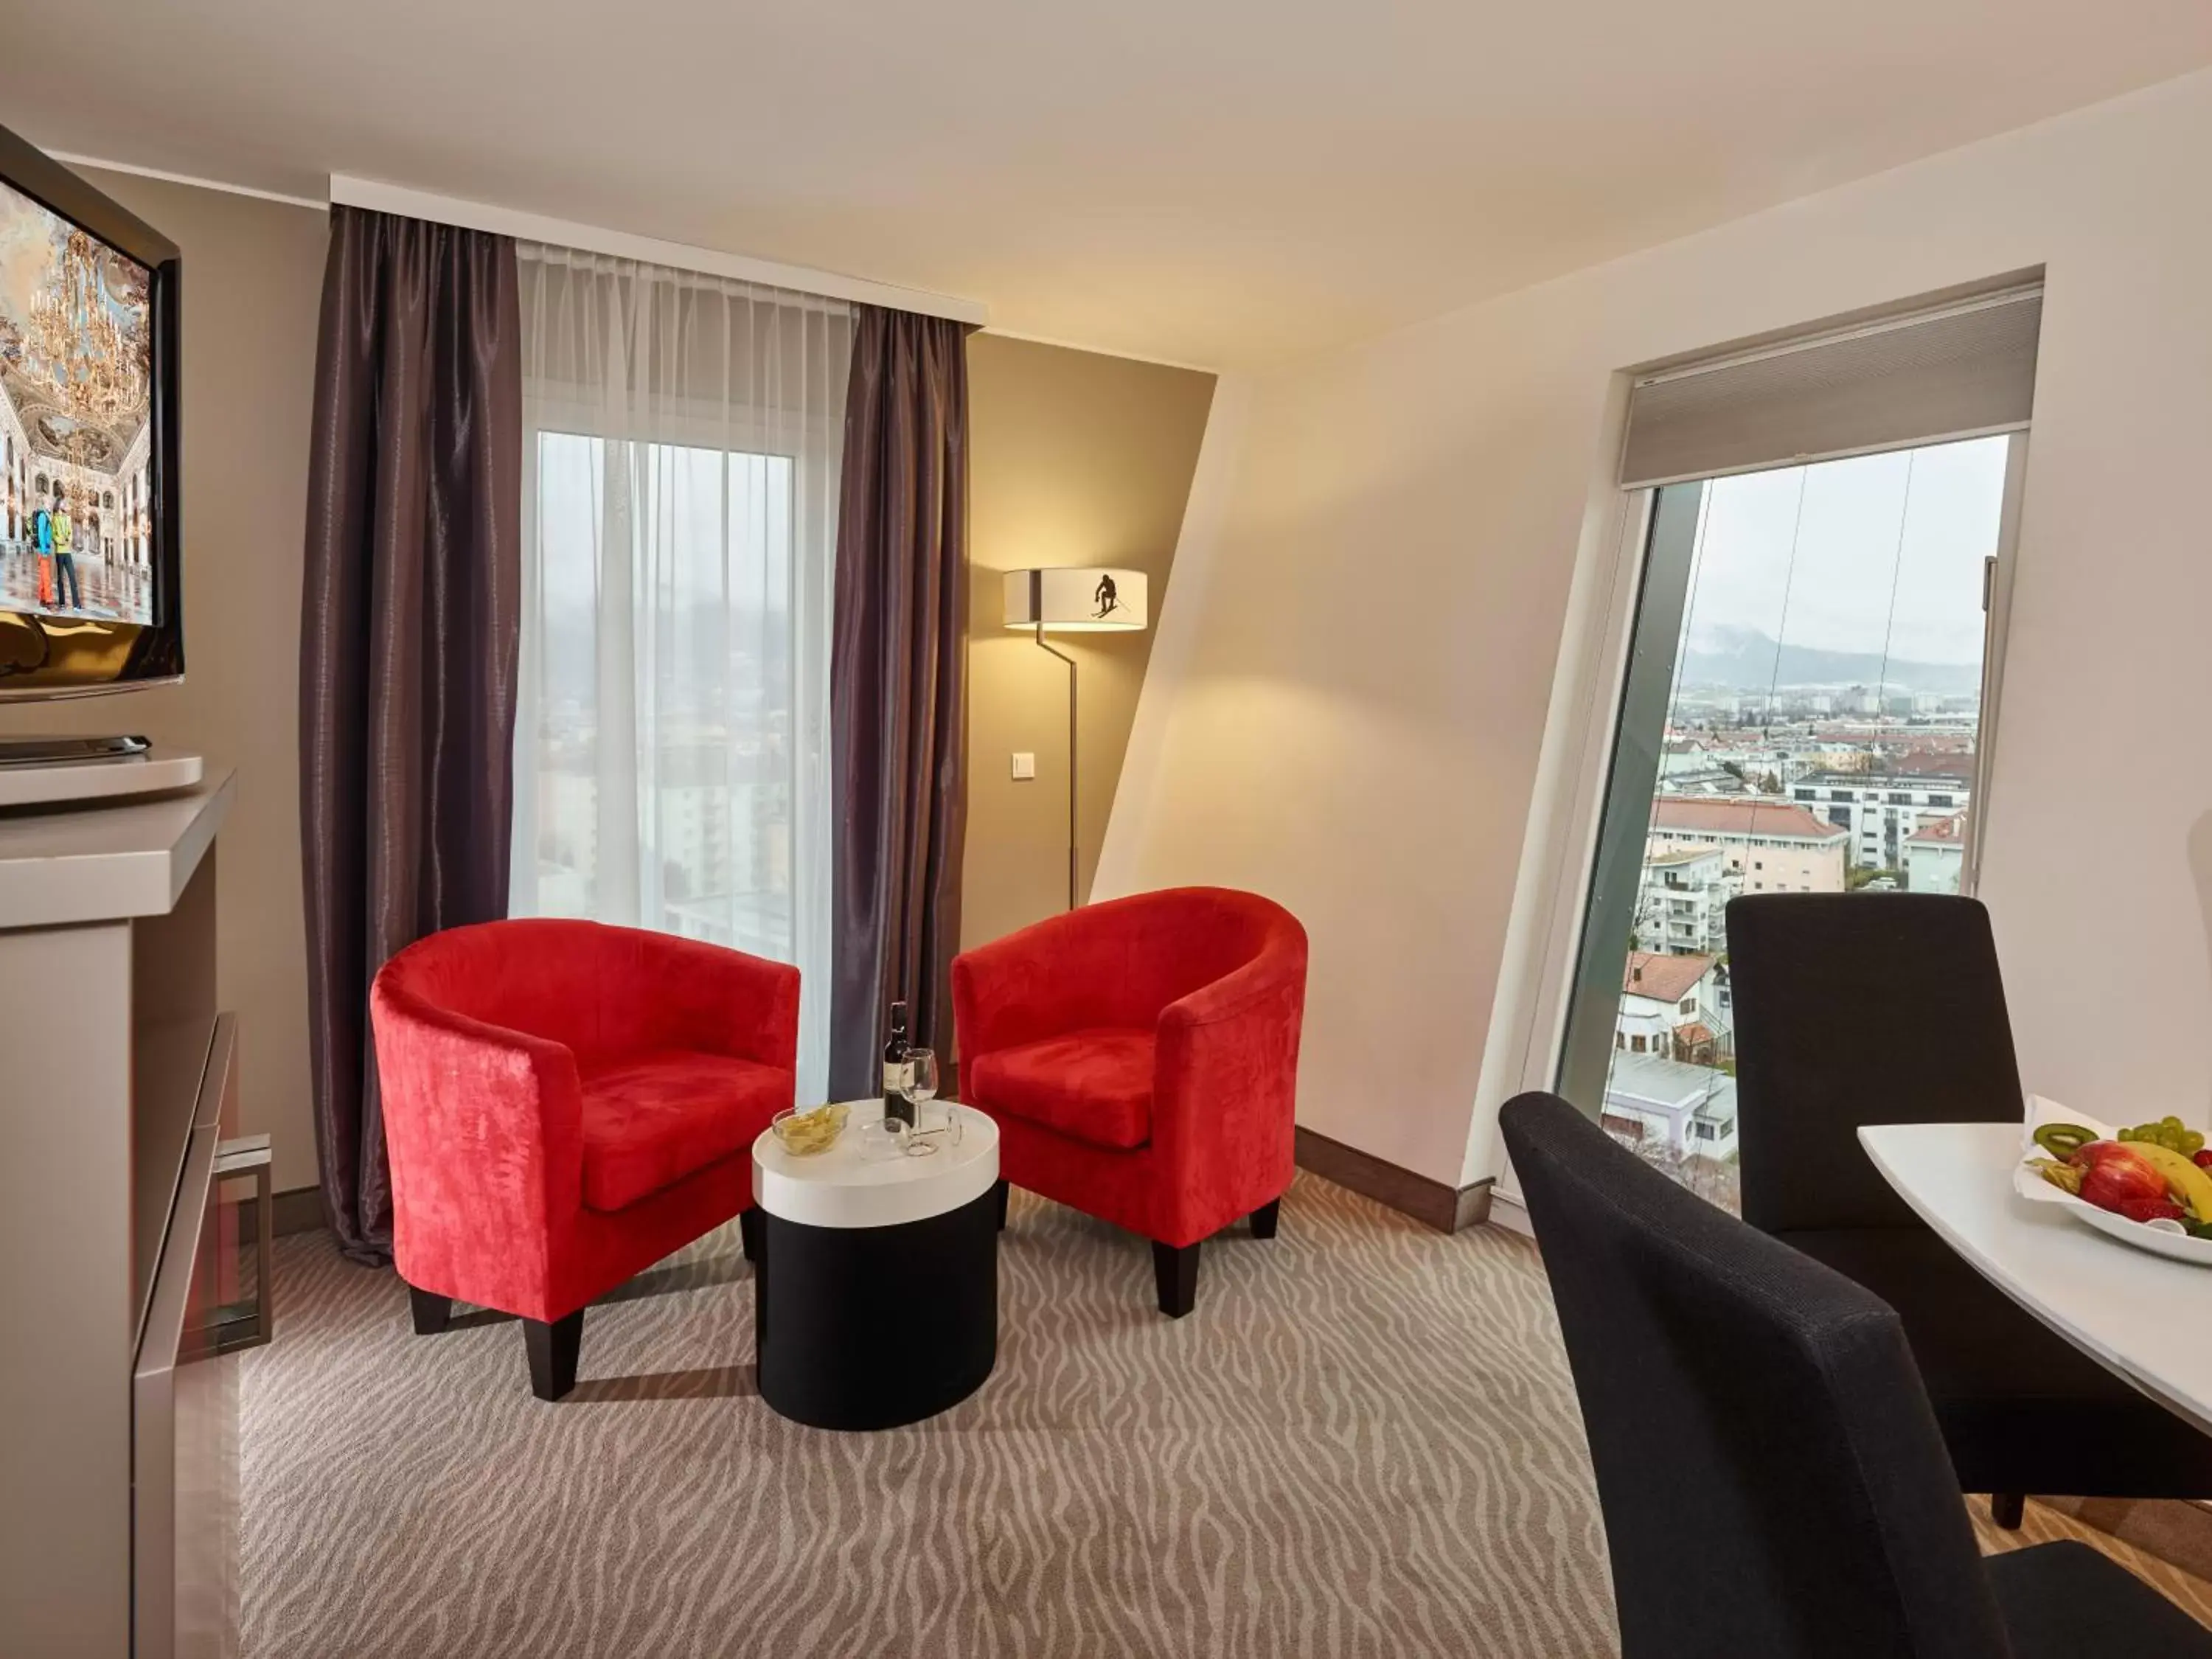 TV and multimedia, Seating Area in Tivoli Hotel Innsbruck